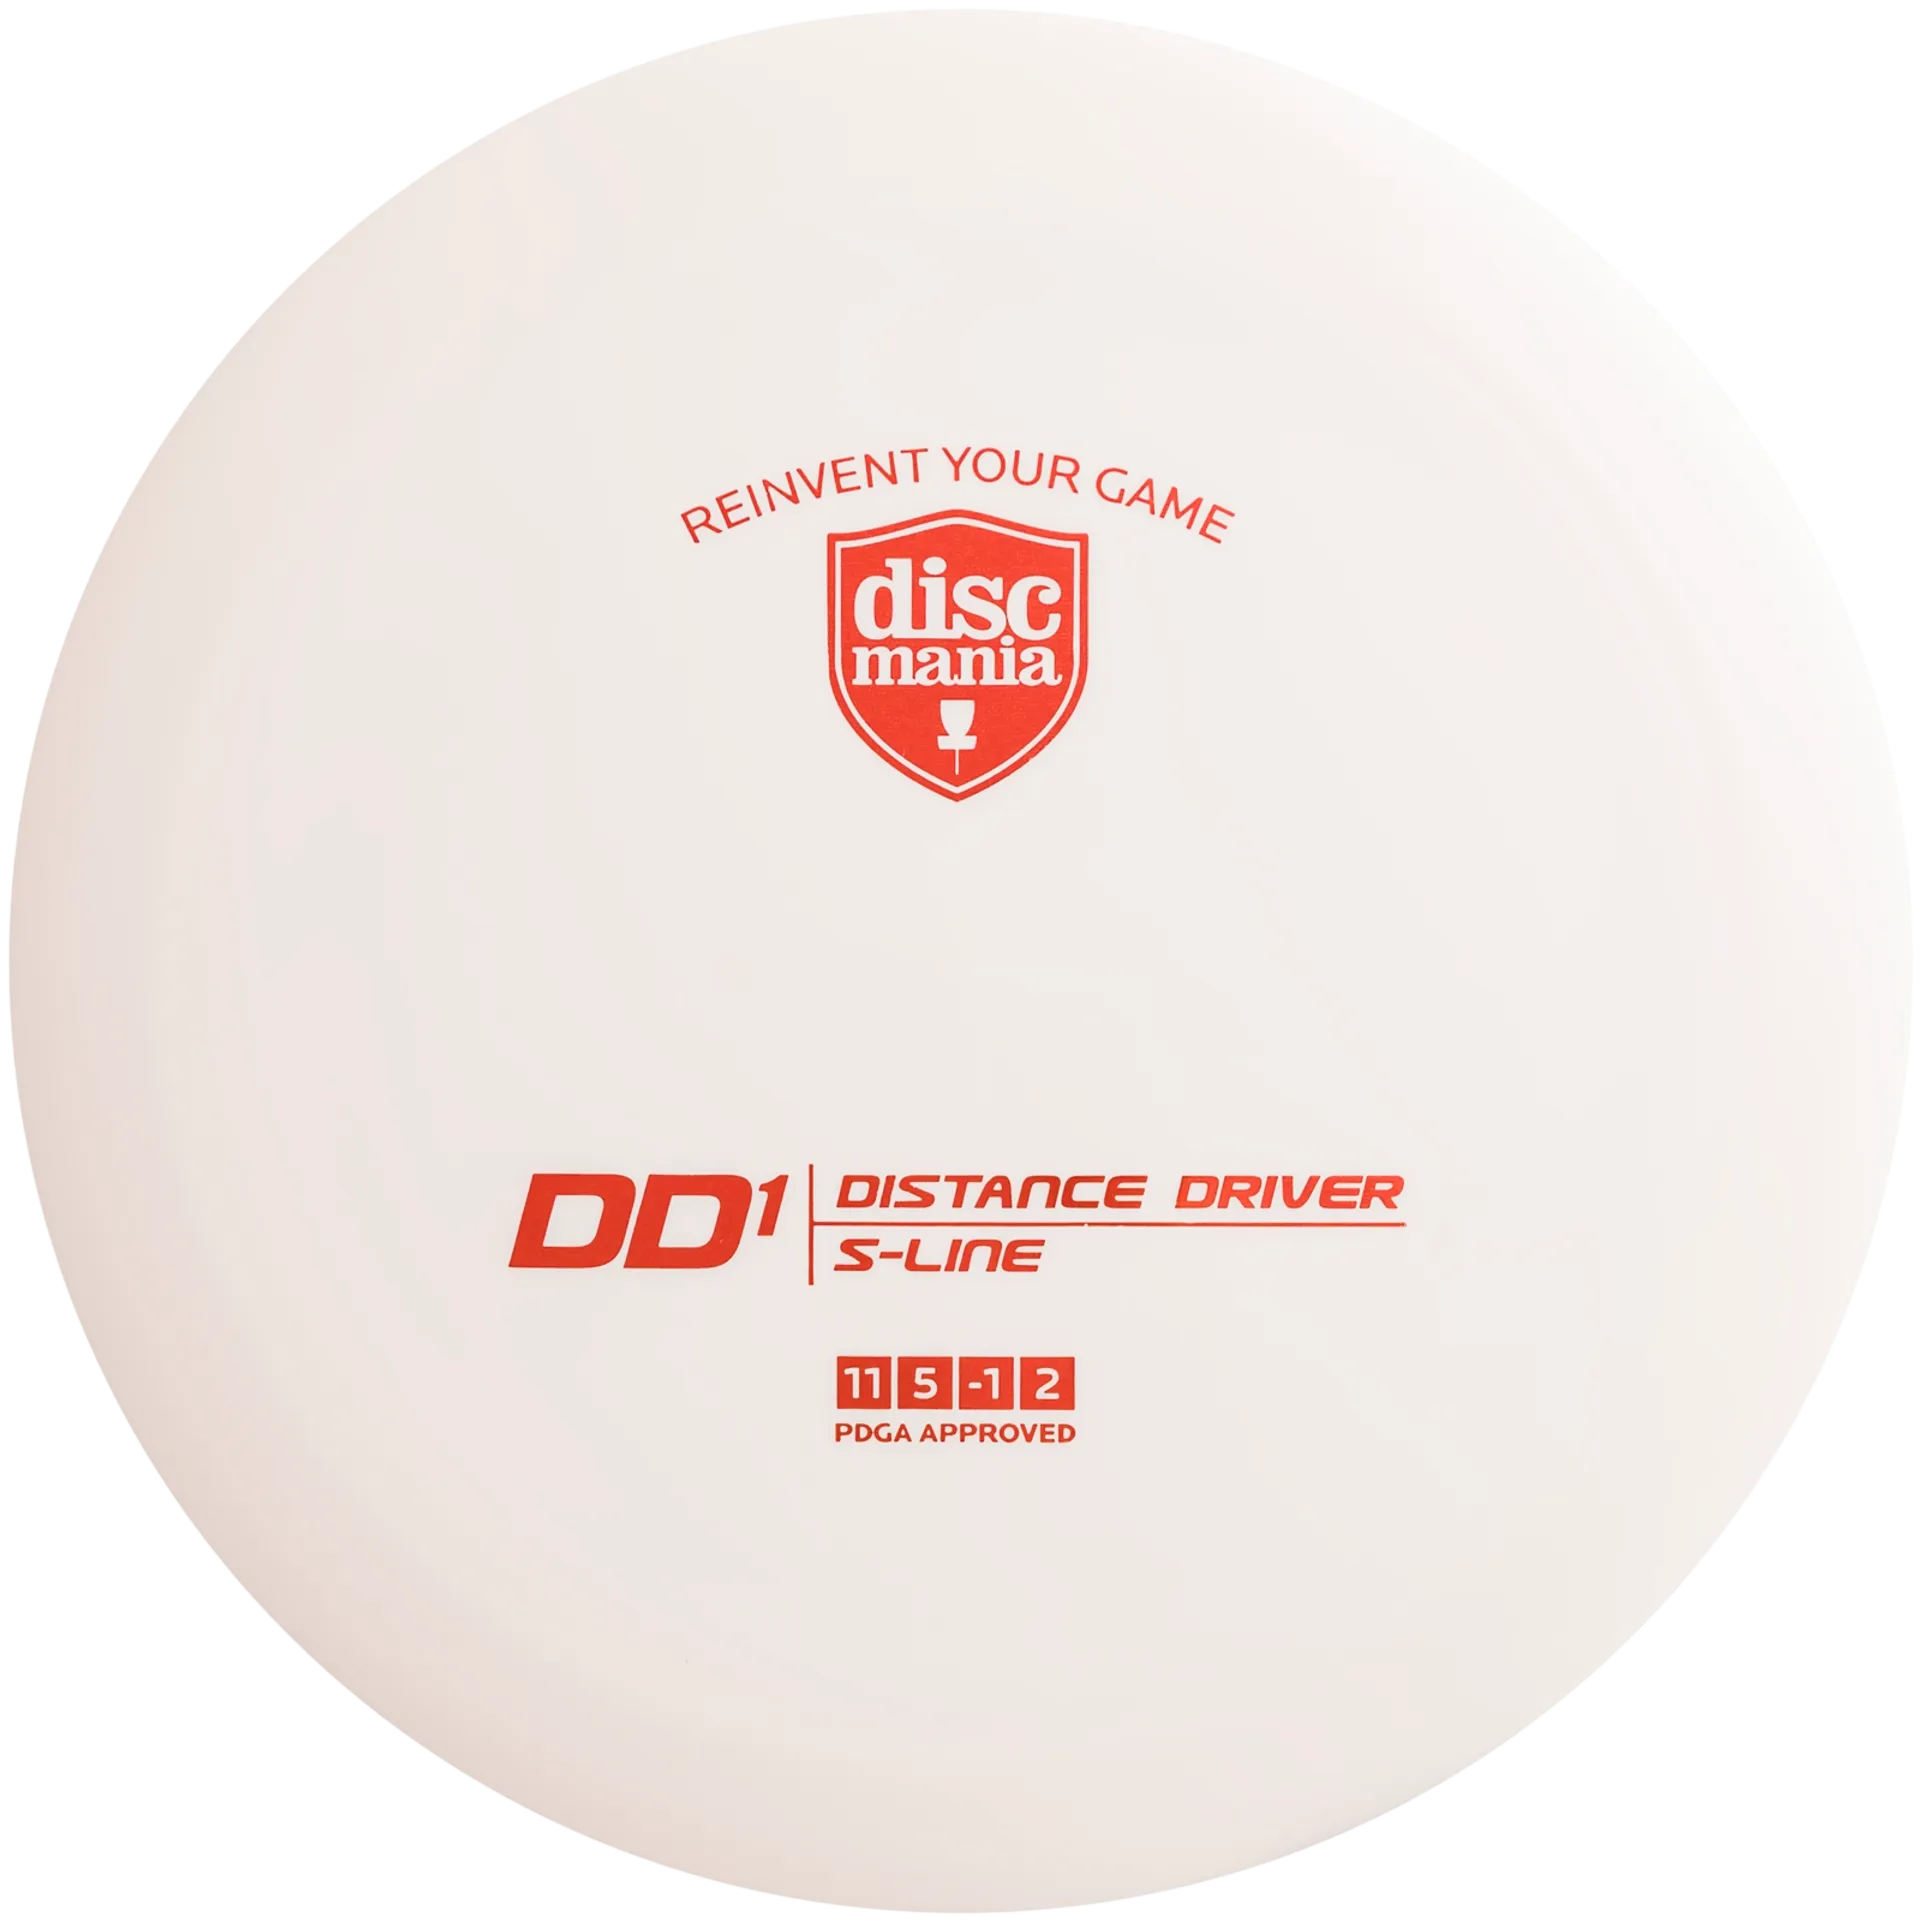 Discmania draiveri Originals S-line DD1 - 1